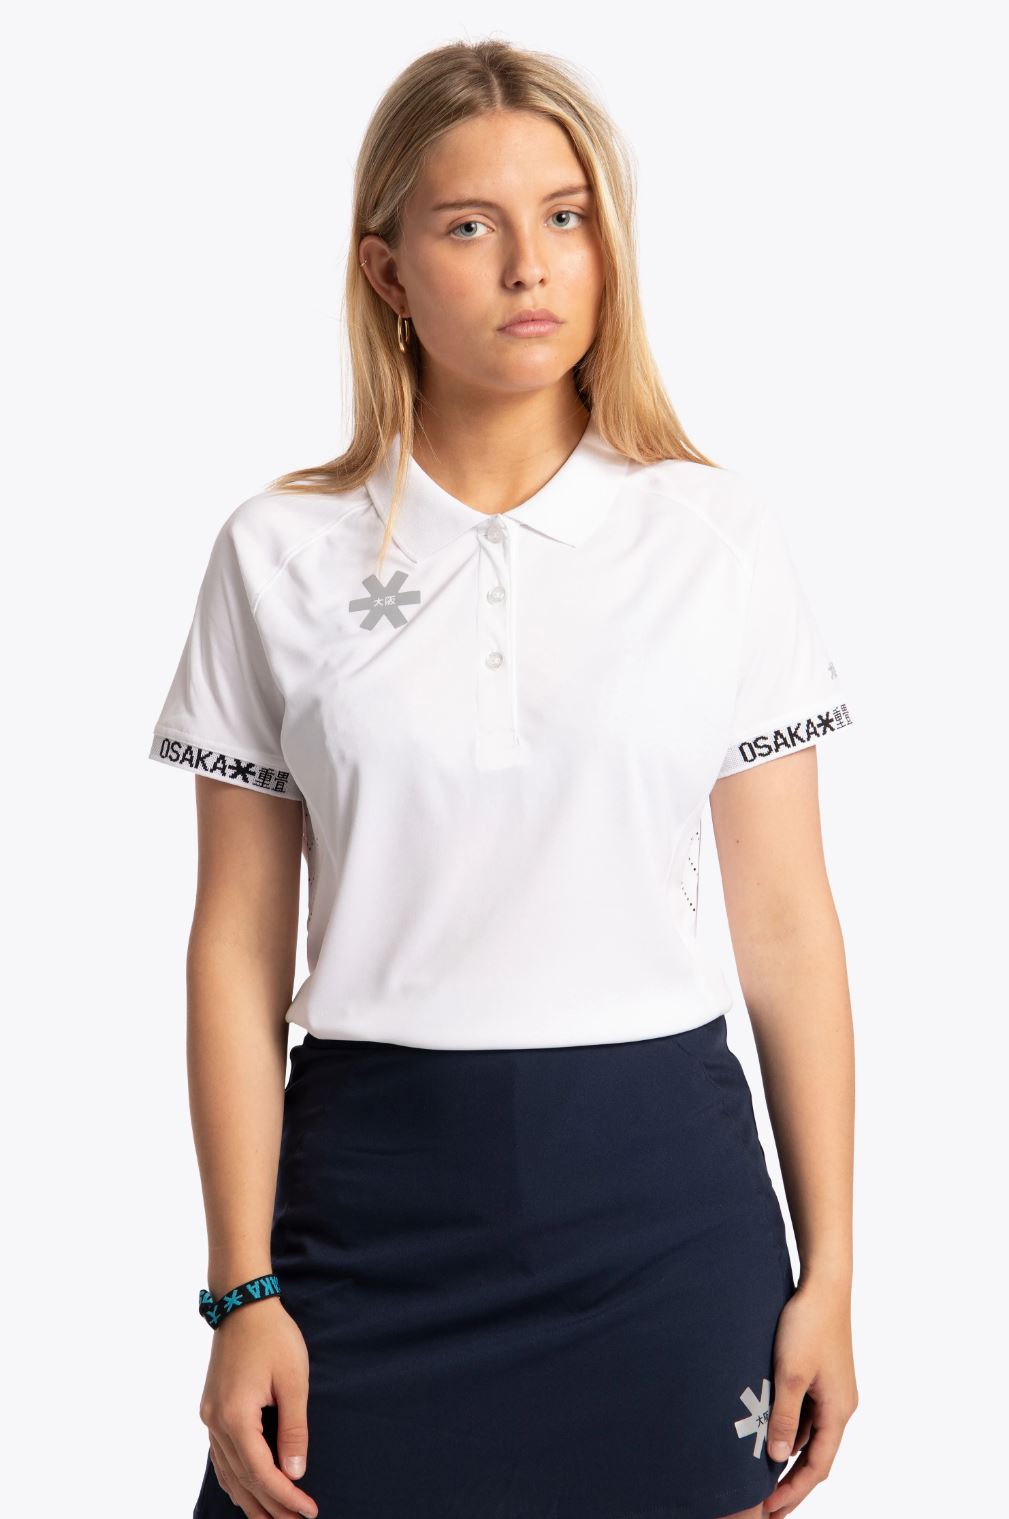 Osaka Women's Polo Jersey (White)